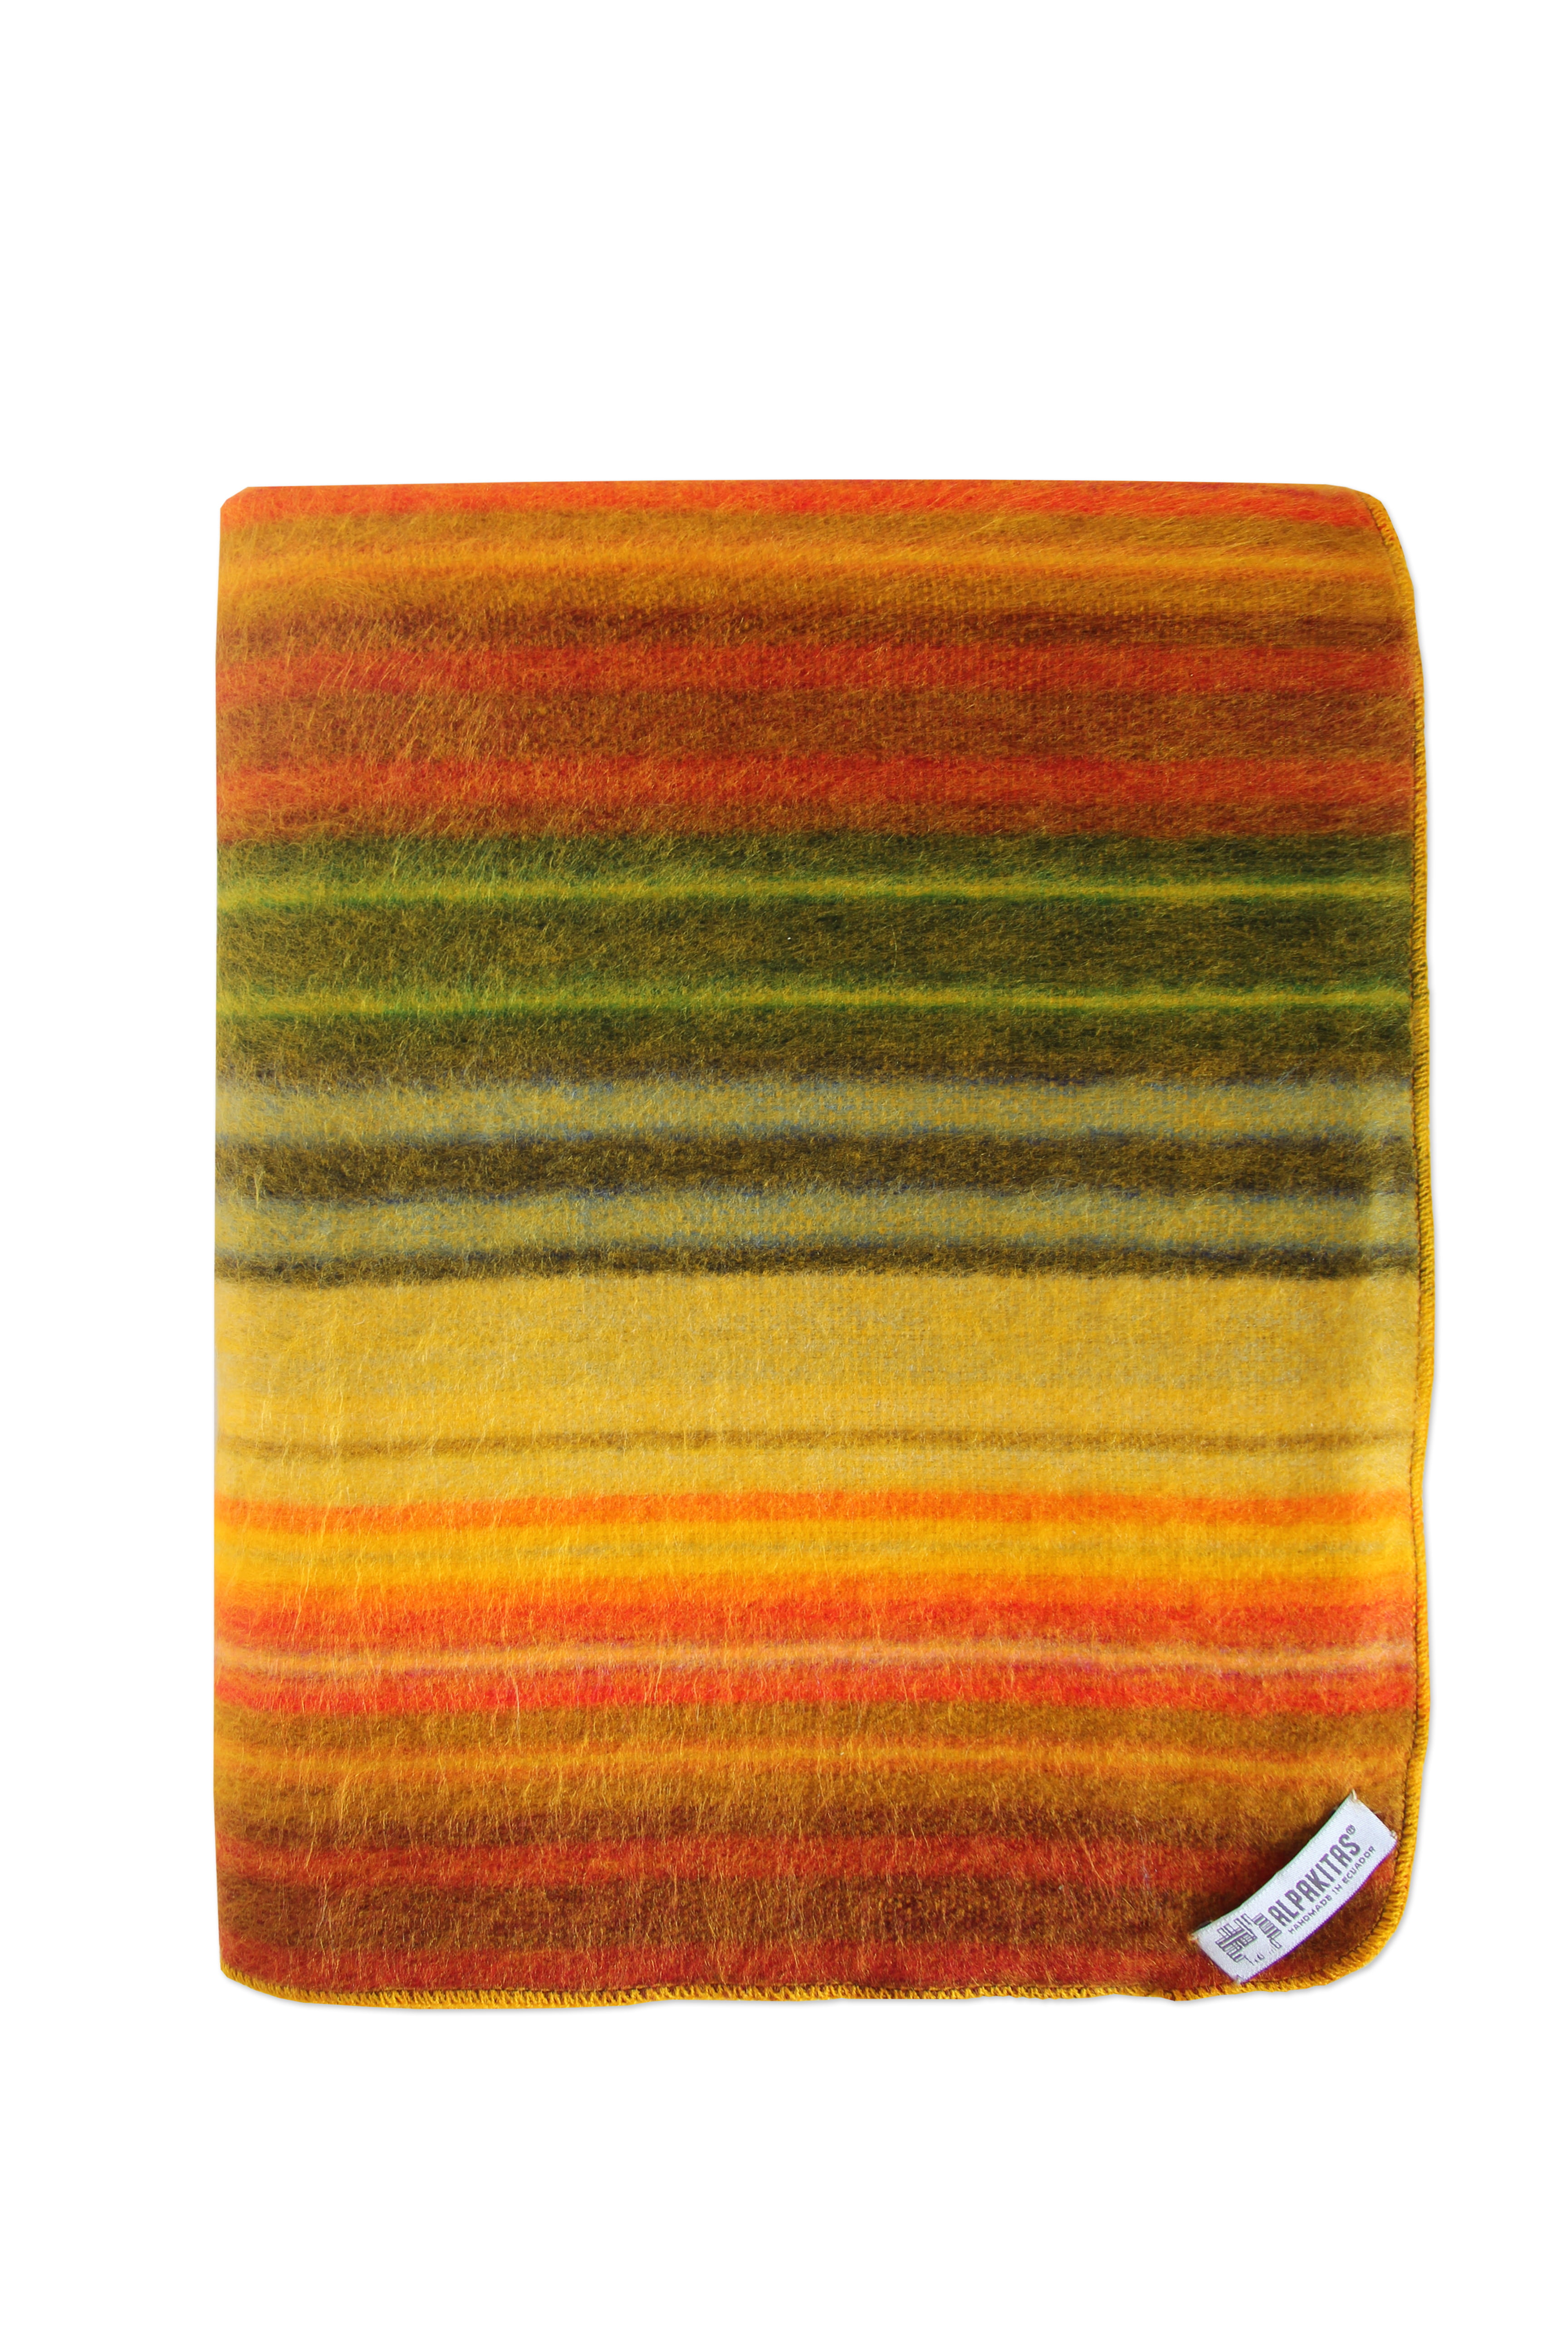 Fleece Blanket Orange Twin Size 64 x 45 inches Blankets & Throws Throw Blanket for Couch | Cooling Blanket Alpakitas Premium Handmade Alpaca Throw Blanket 